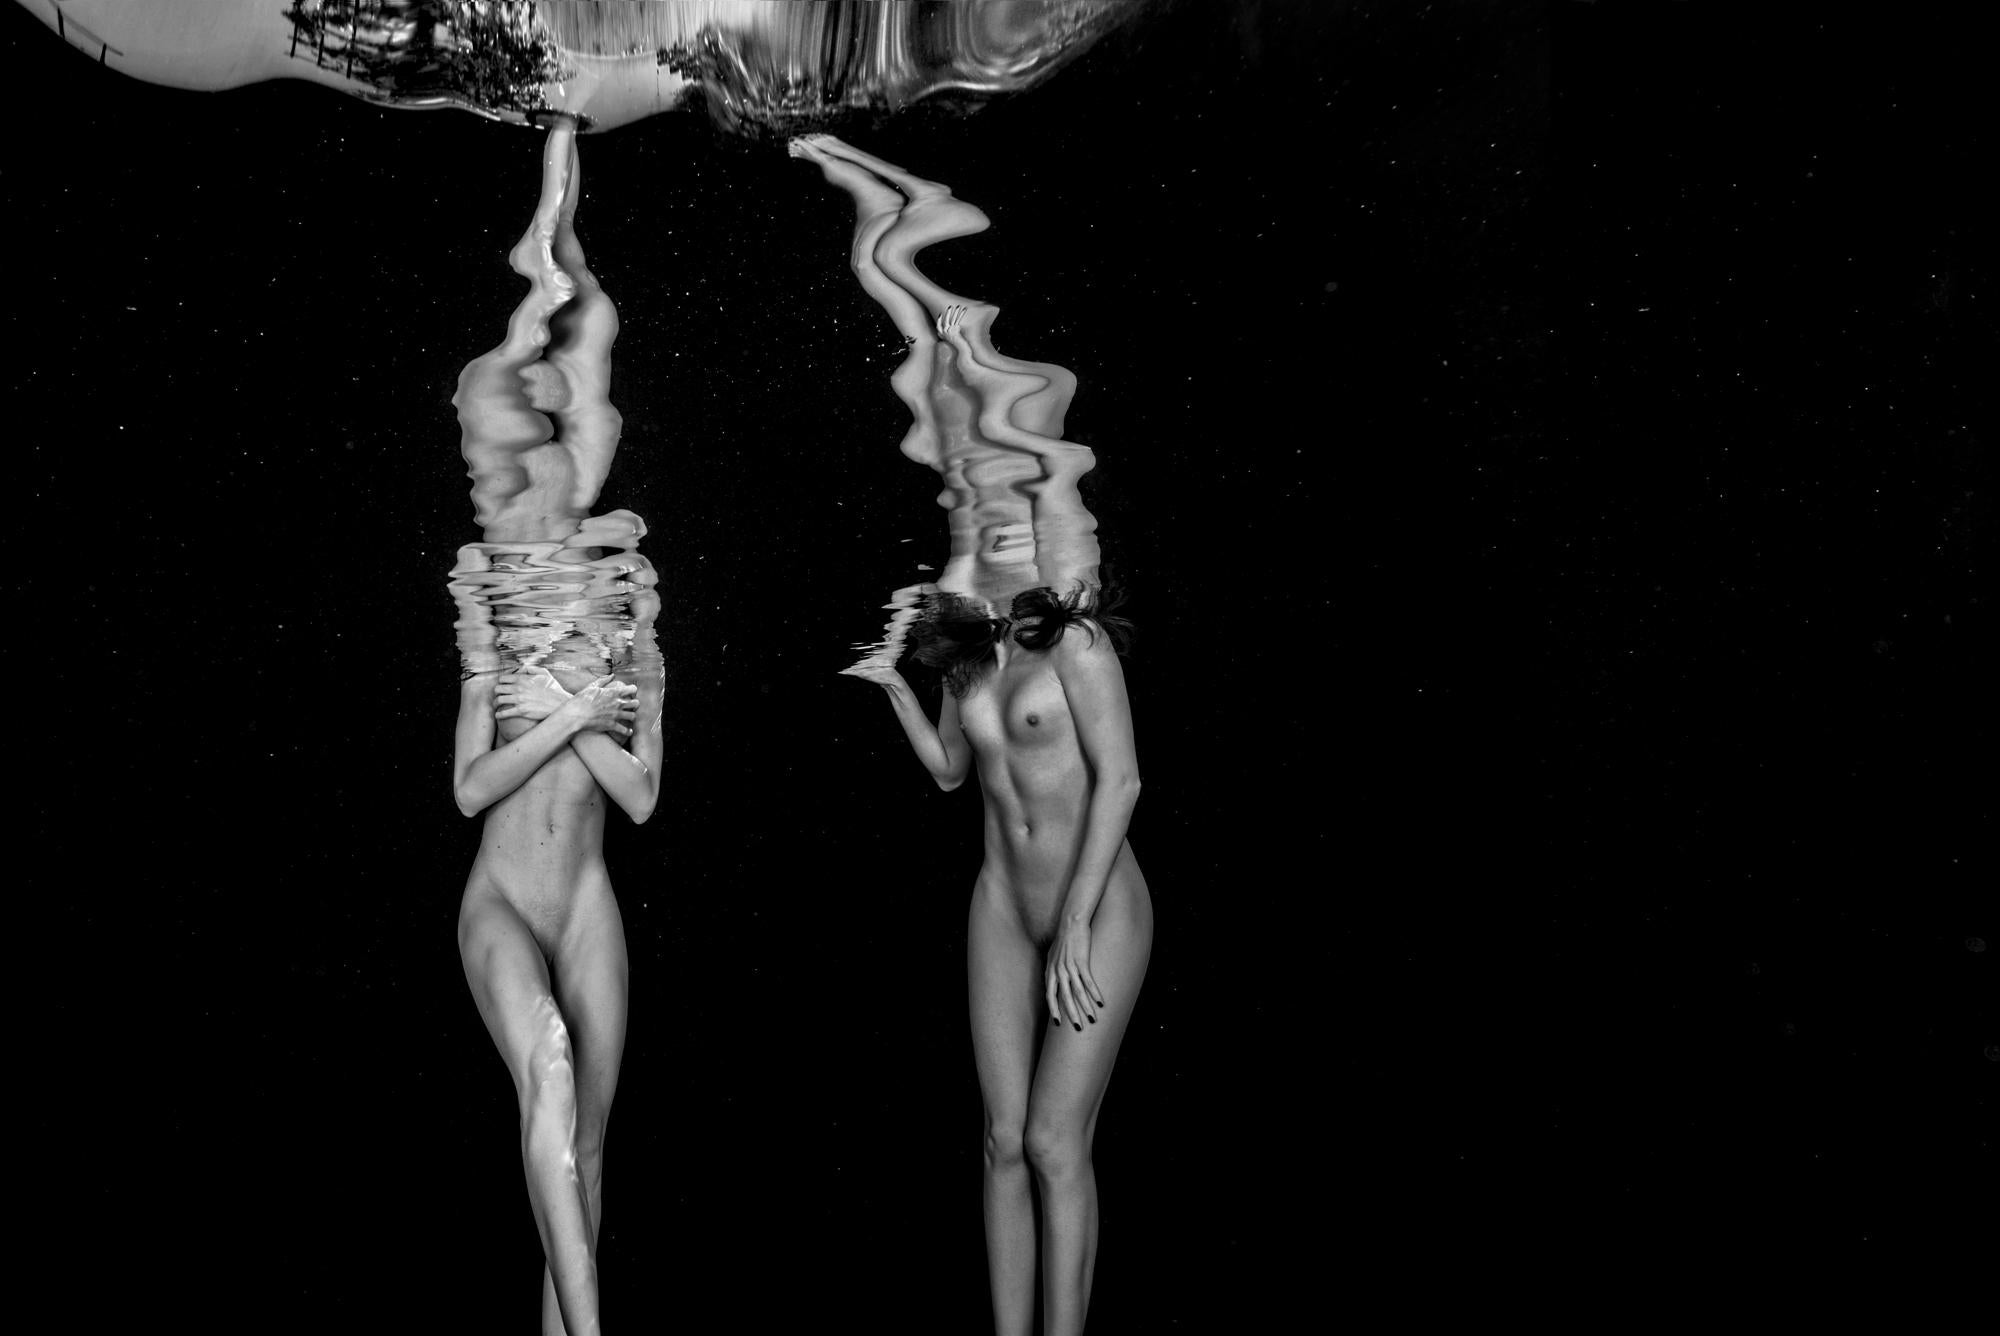 Alex Sher Nude Photograph - Small Talk - underwater black & white nude photograph - archival pigment 16x24"